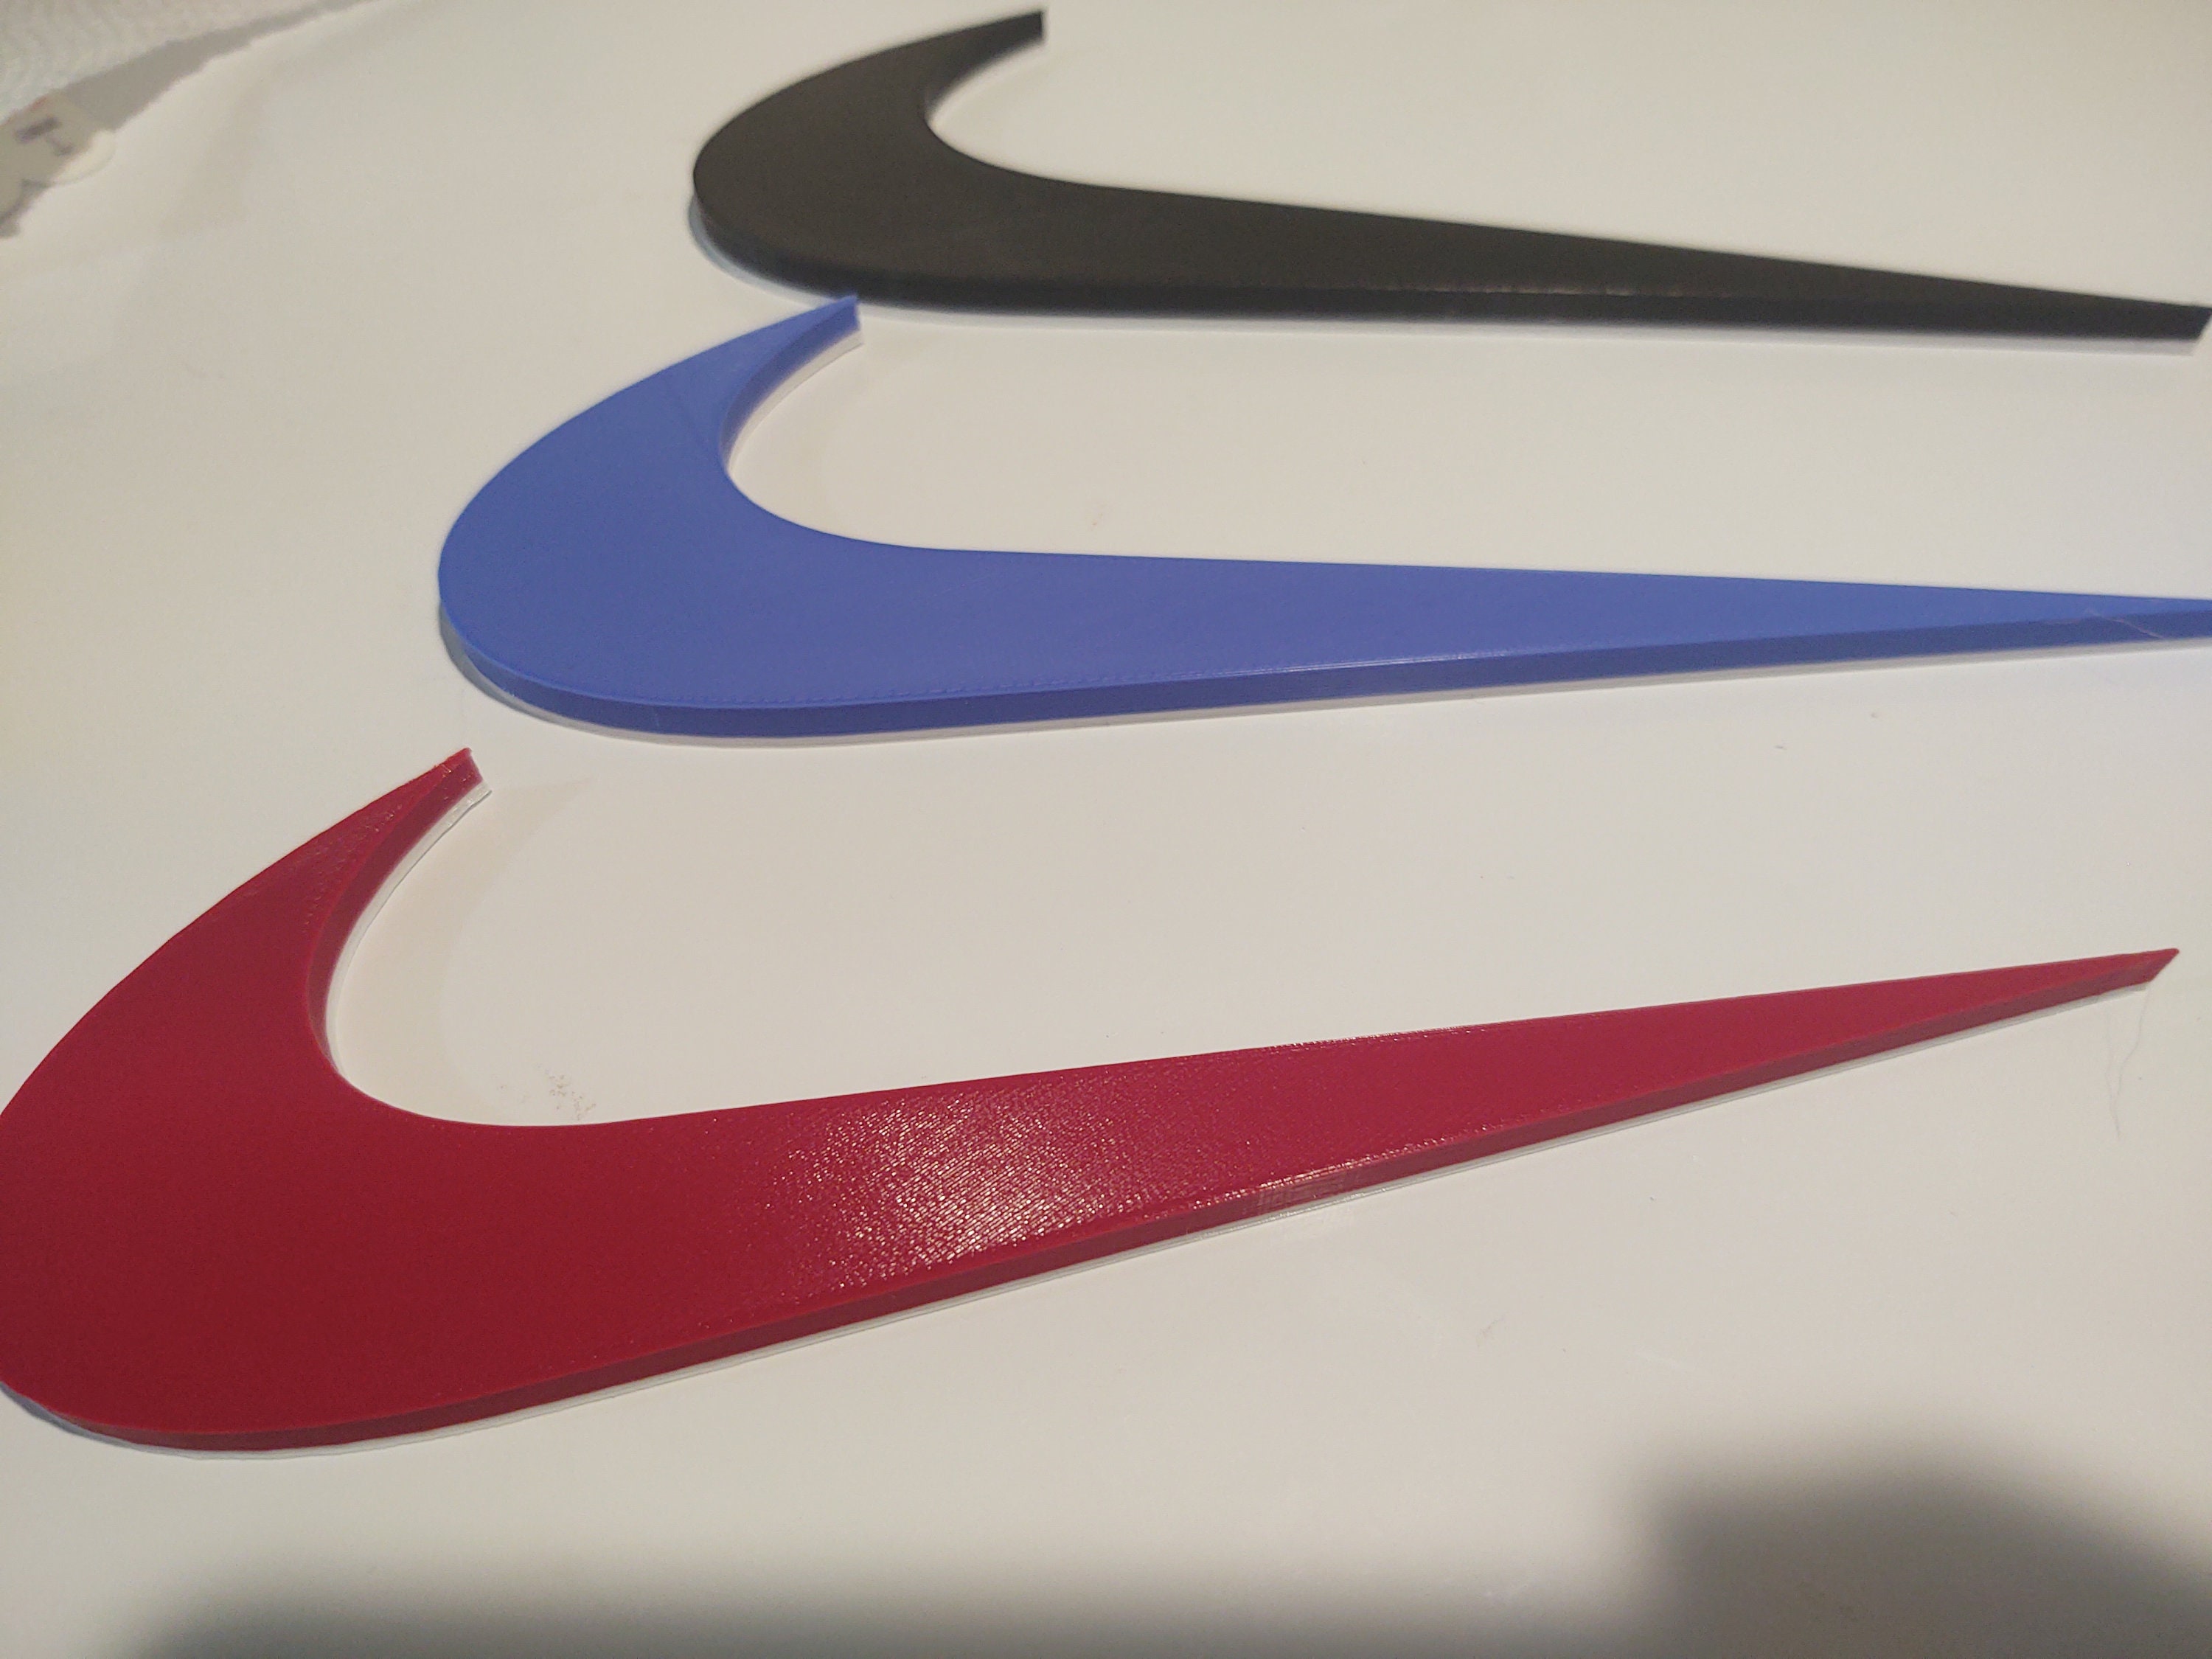 Can a logo like the Nike Swoosh be used in an art print? : r